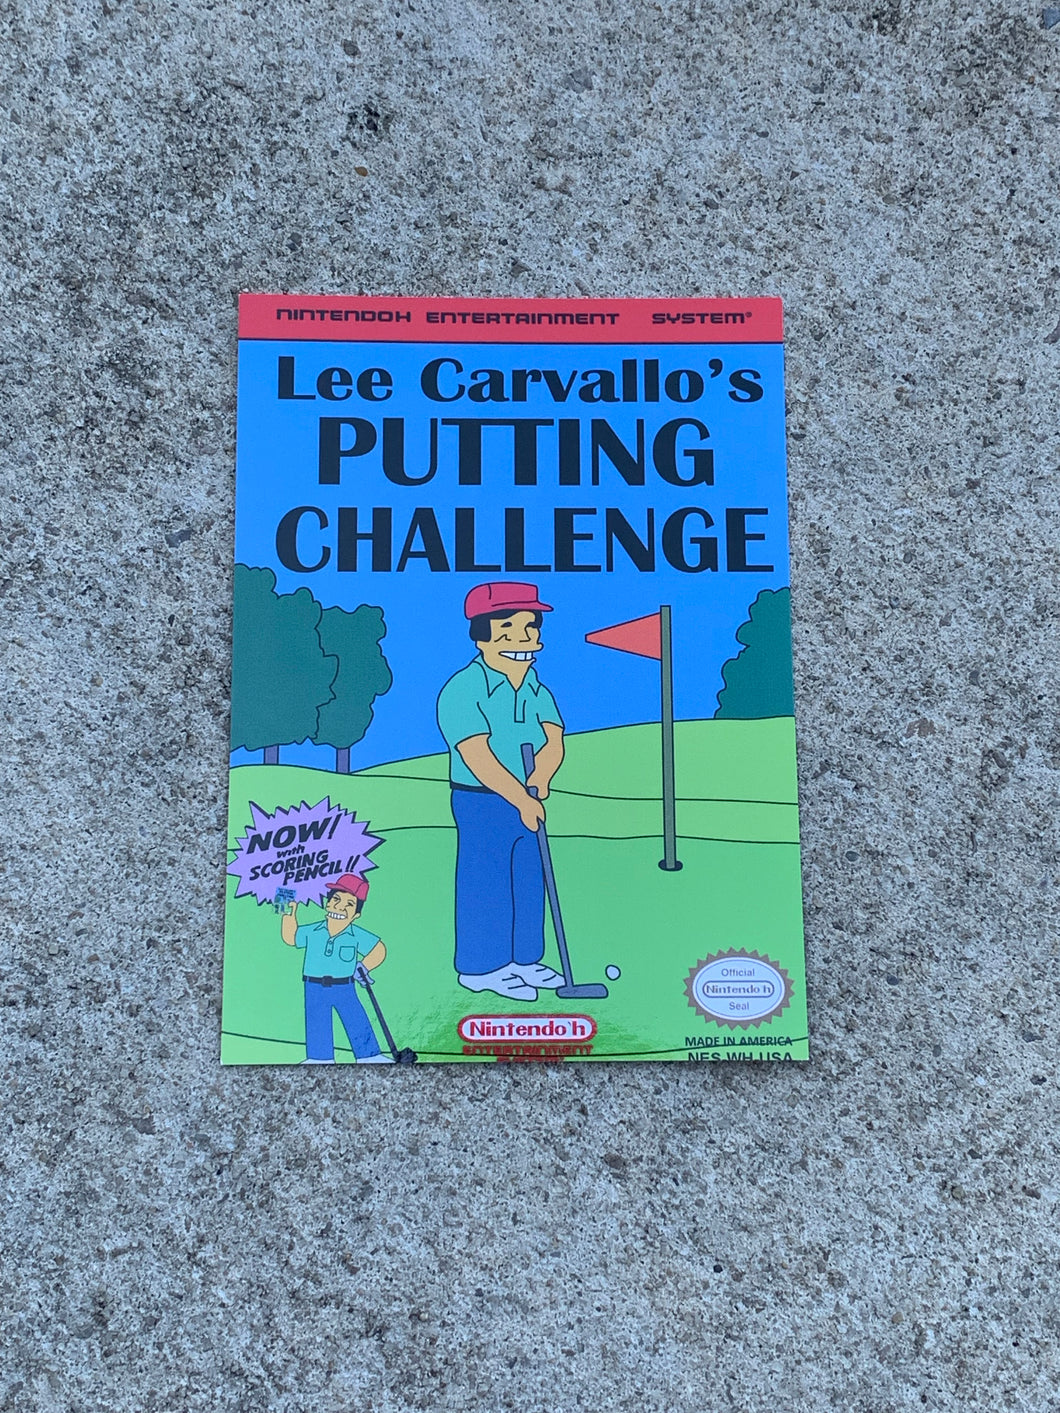 Lee Carvallo's Putting Challenge print